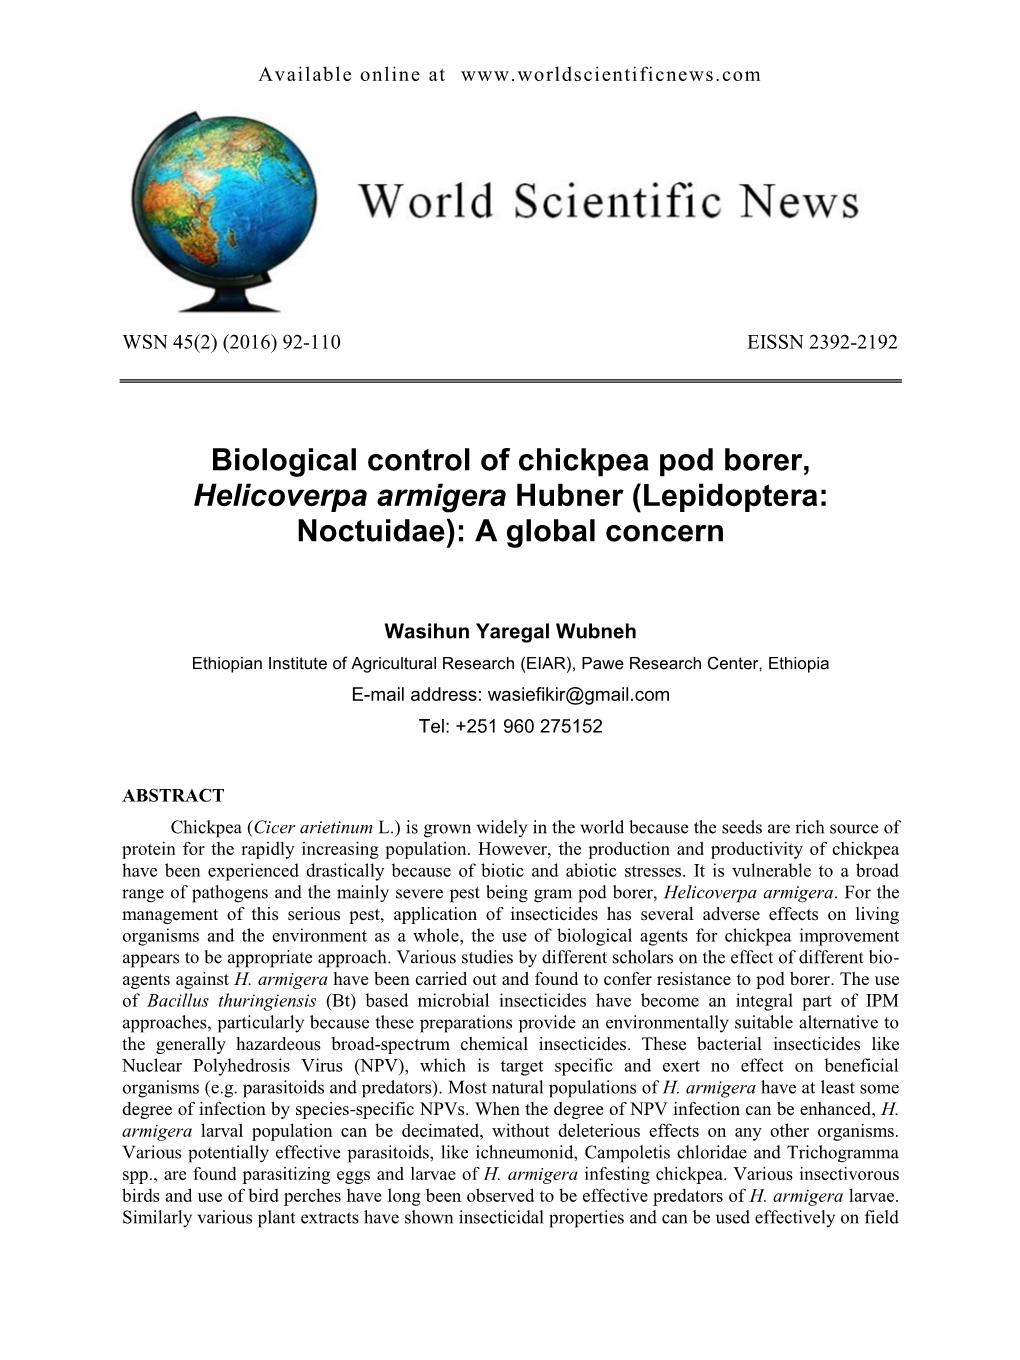 Biological Control of Chickpea Pod Borer, Helicoverpa Armigera Hubner (Lepidoptera: Noctuidae): a Global Concern